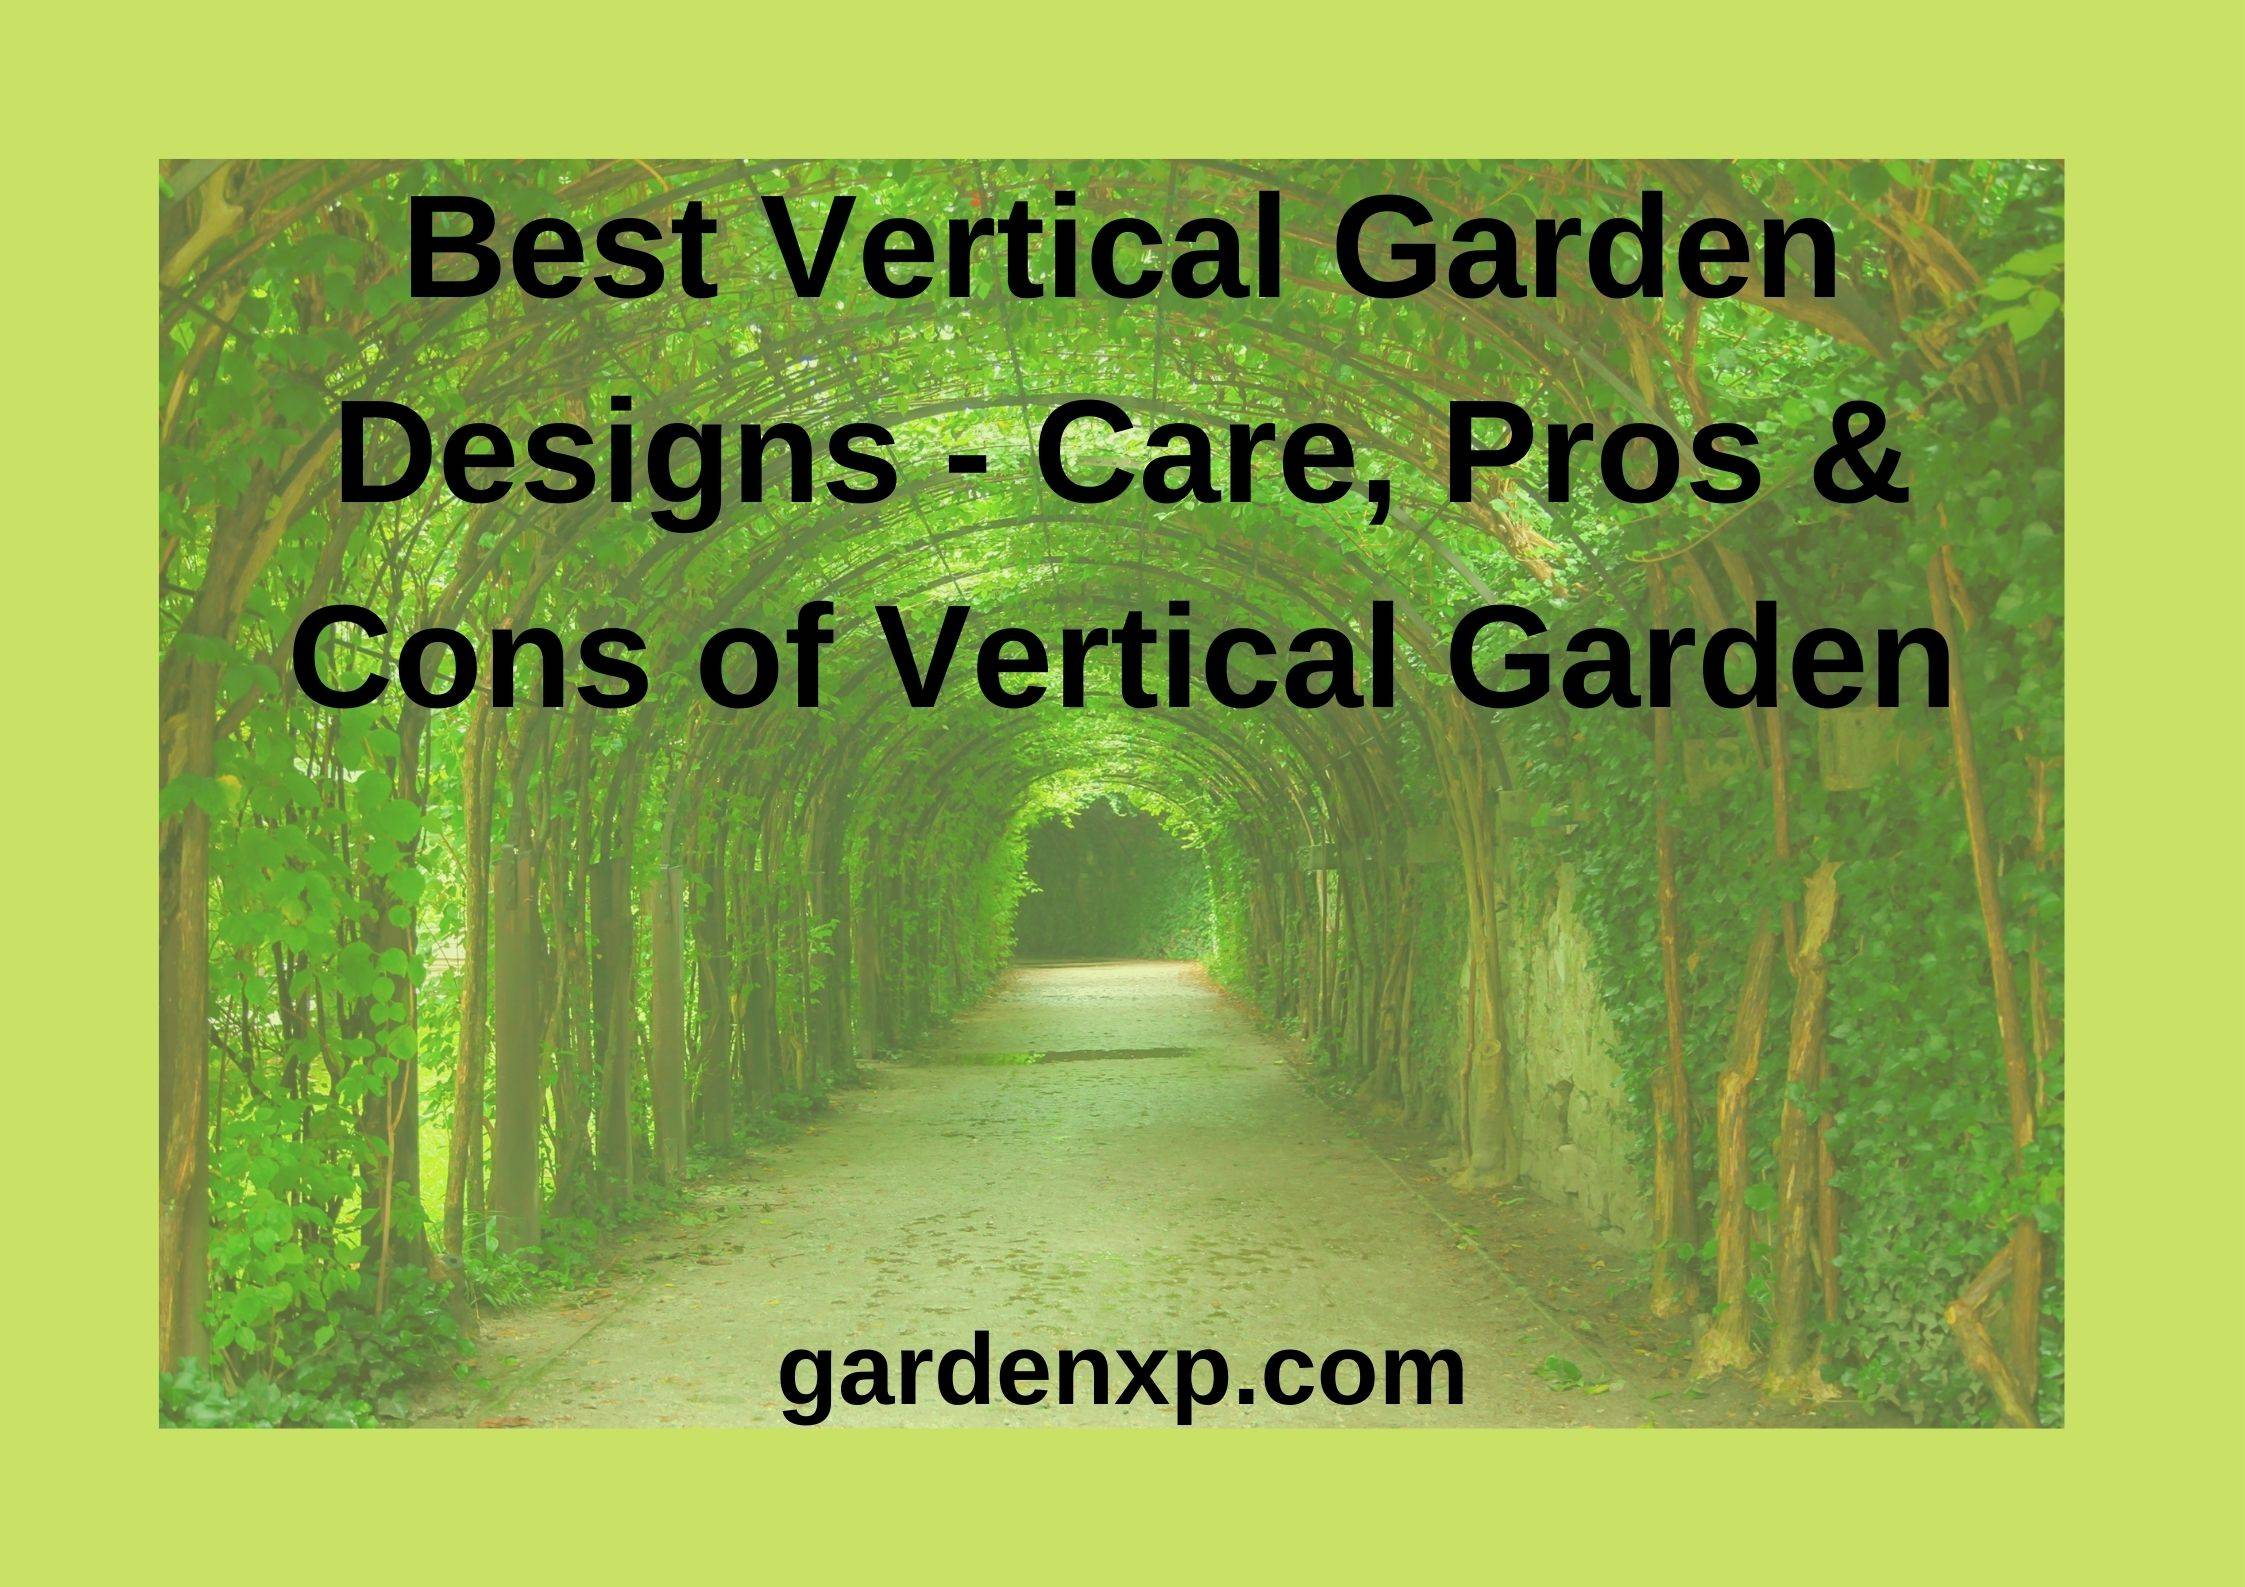 Best Vertical Garden Designs - Care, Pros & Cons of Vertical Garden